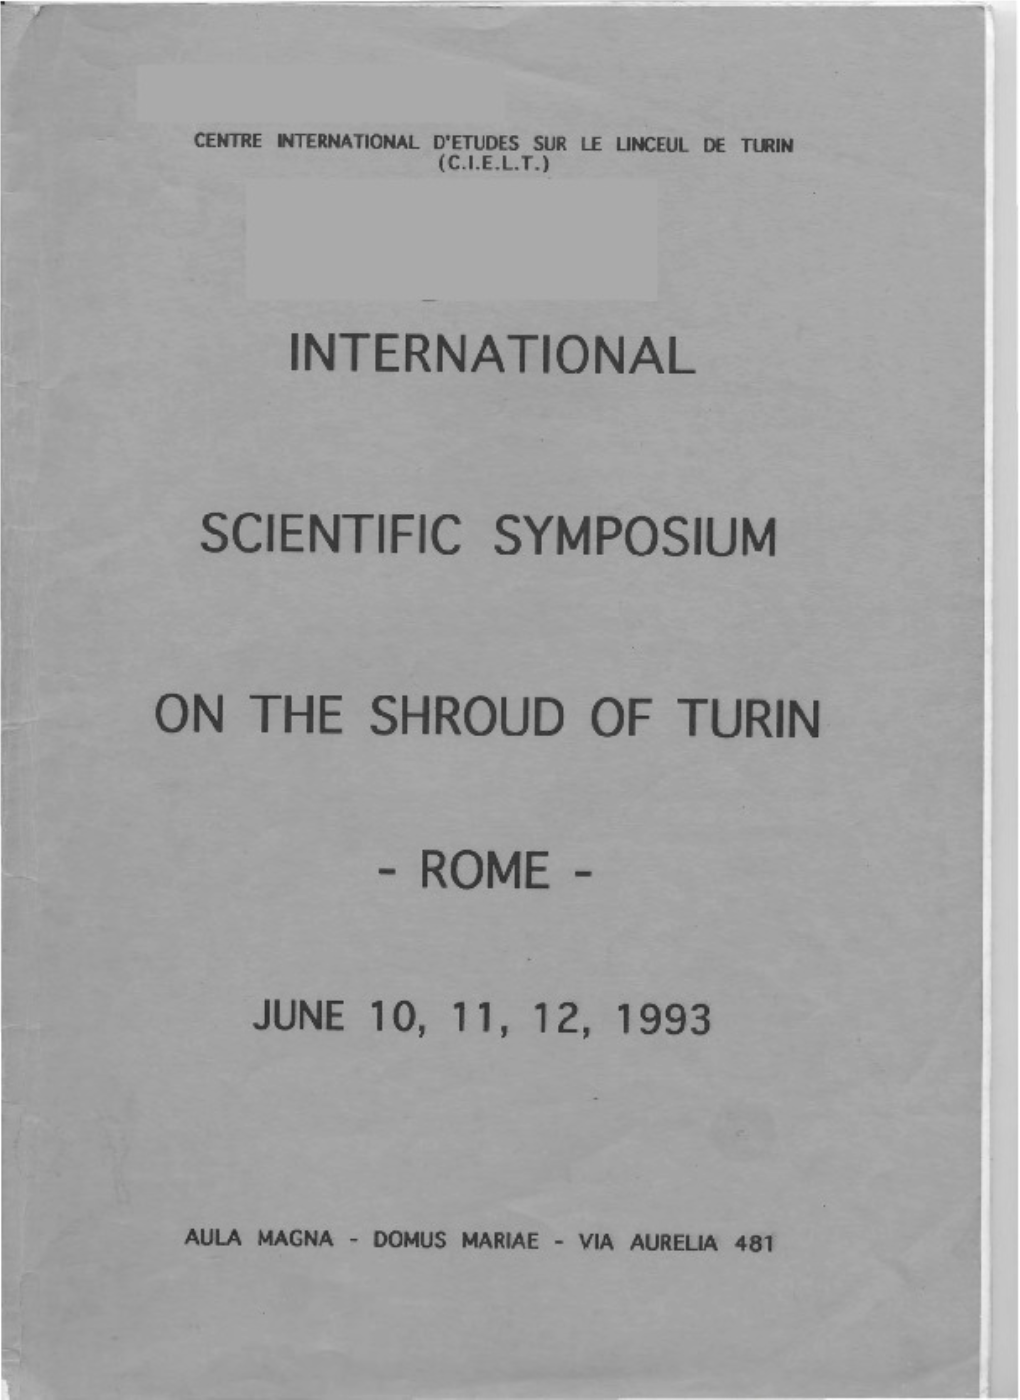 Symposium-Cielt-Rome-1993.Pdf